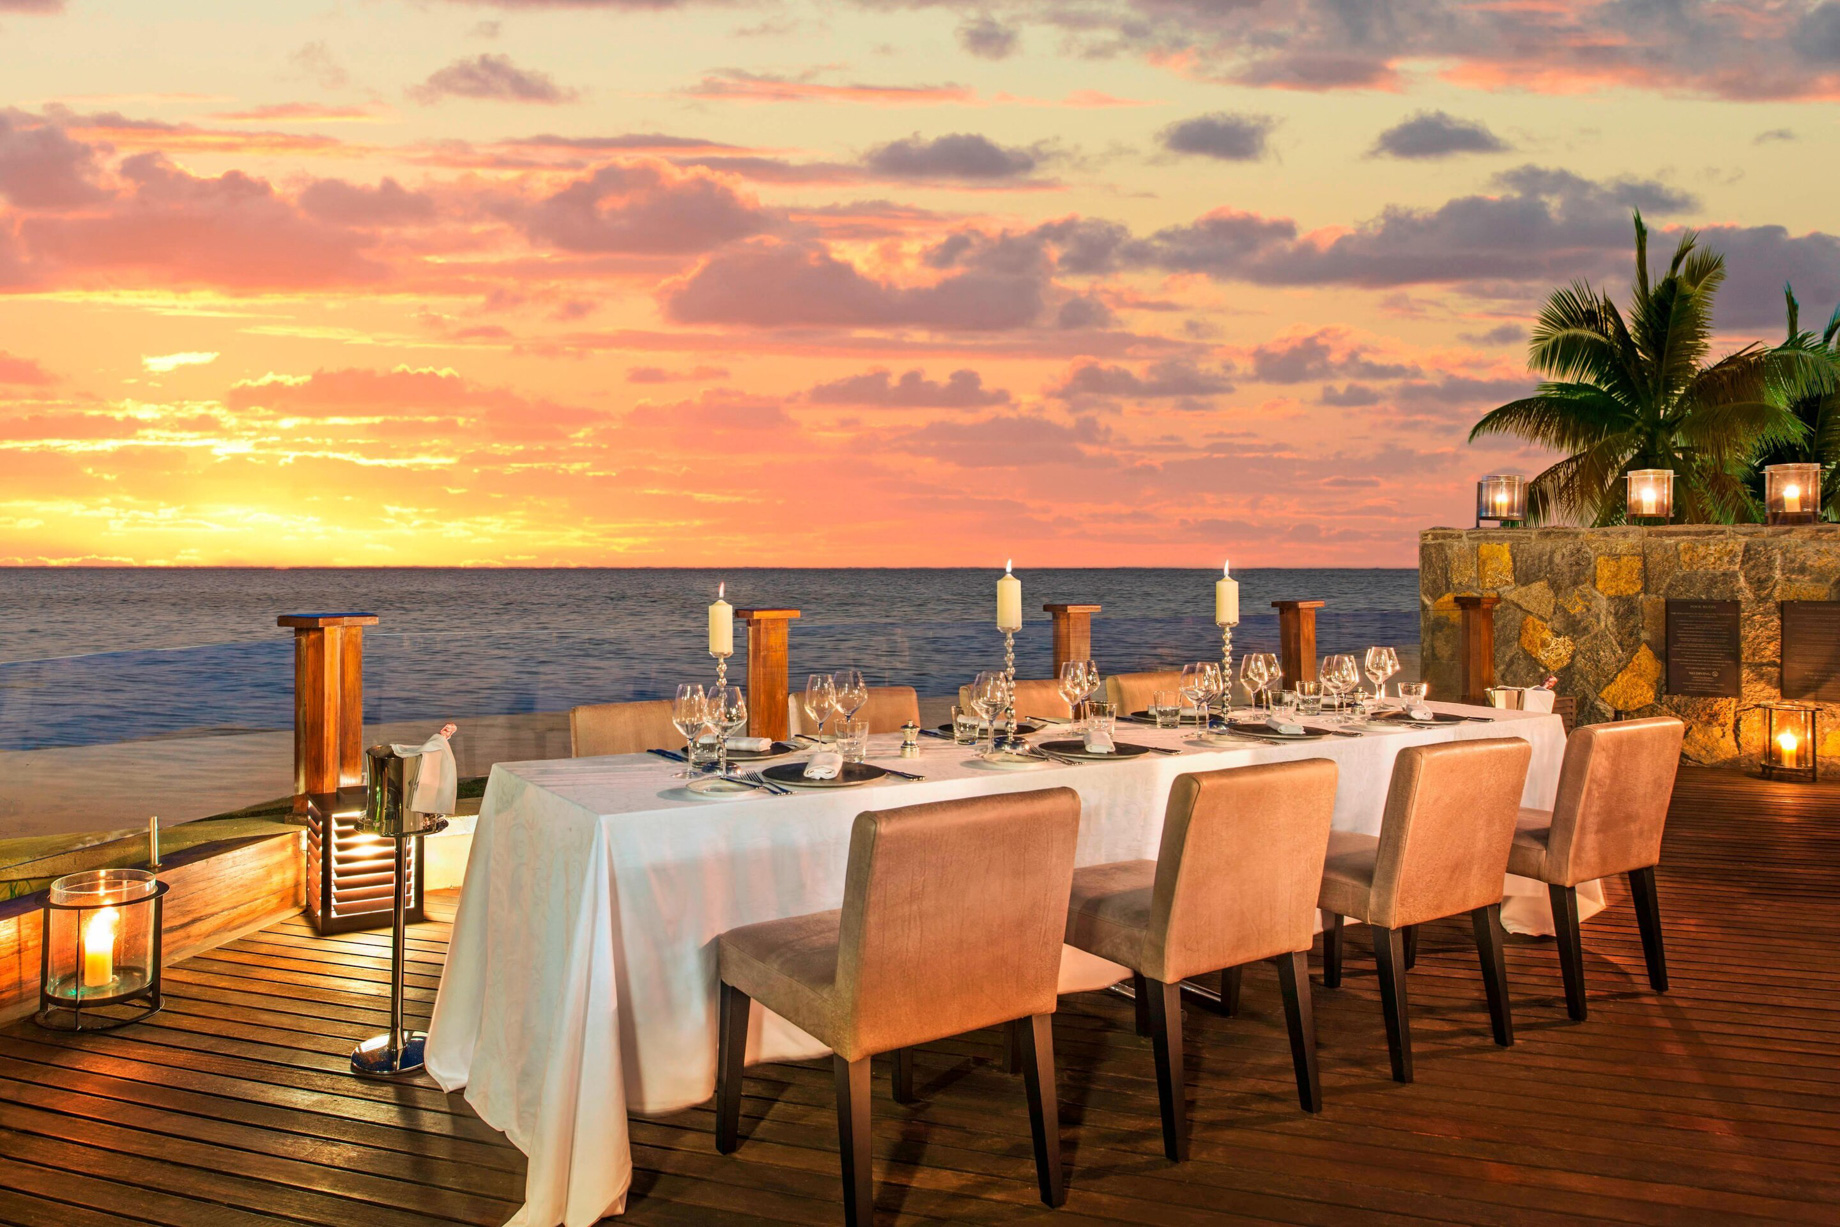 JW Marriott Mauritius Resort - Mauritius - Night Dining on the Terrace